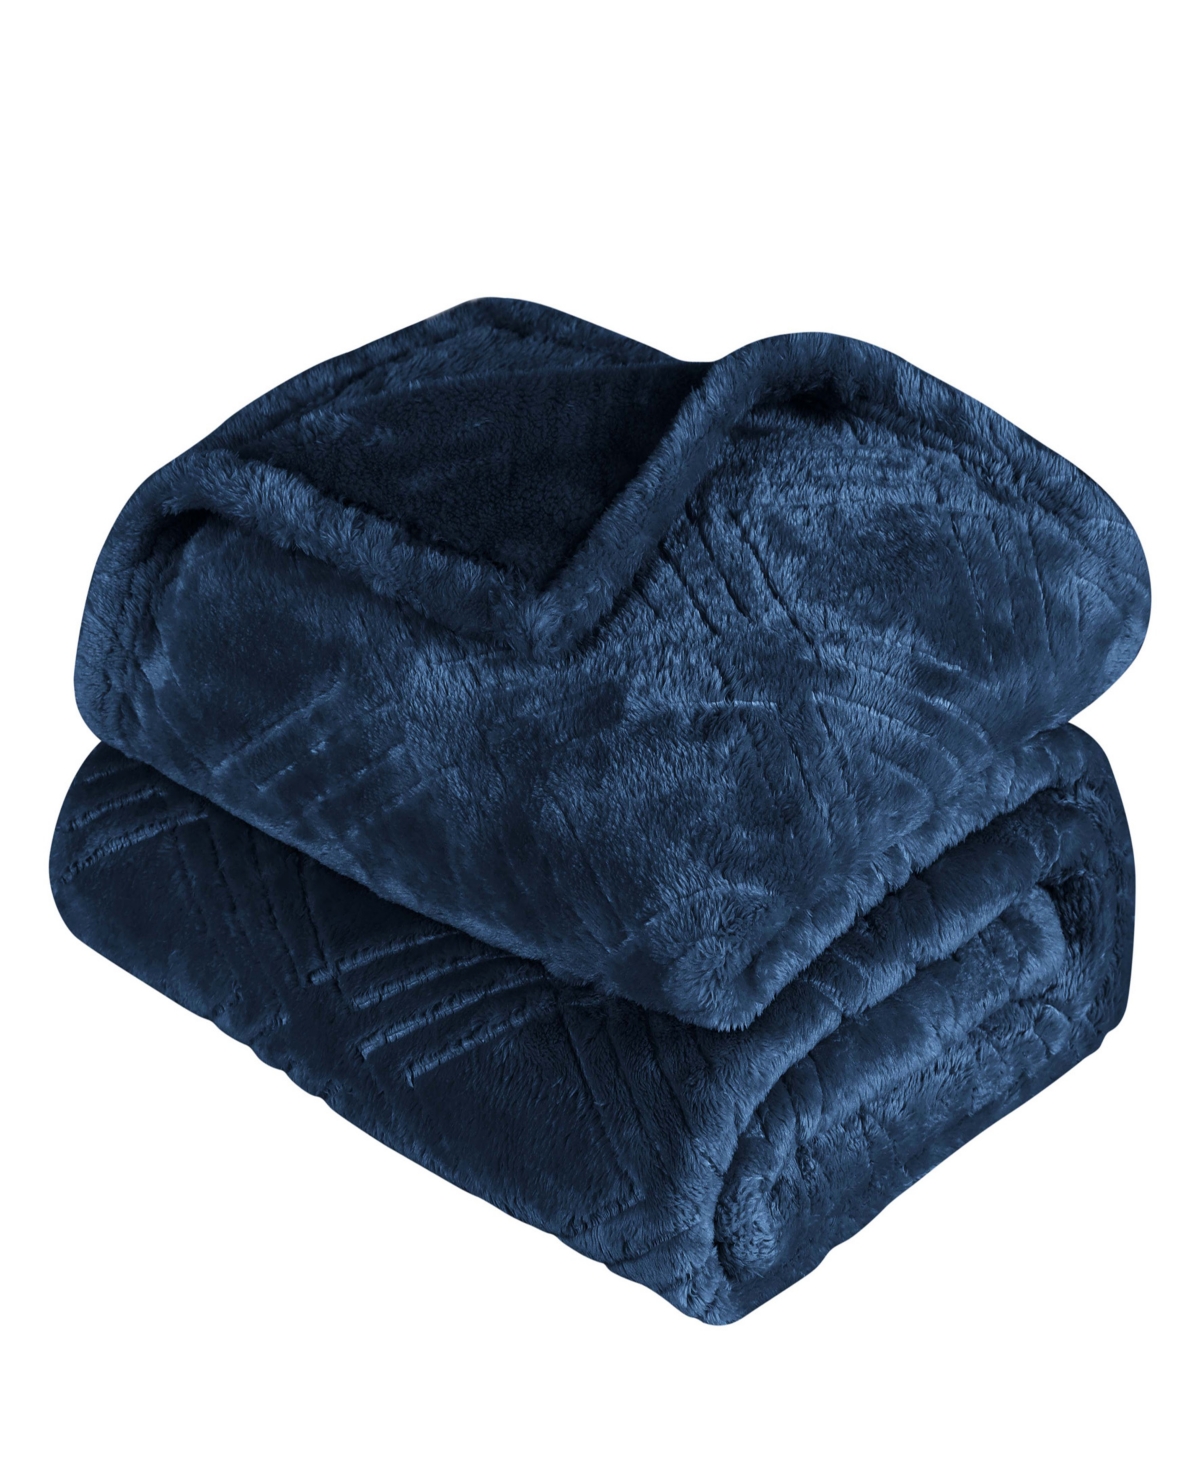 Superior Diamond Flannel Fleece Plush Ultra-soft Blanket, King In Navy Blue